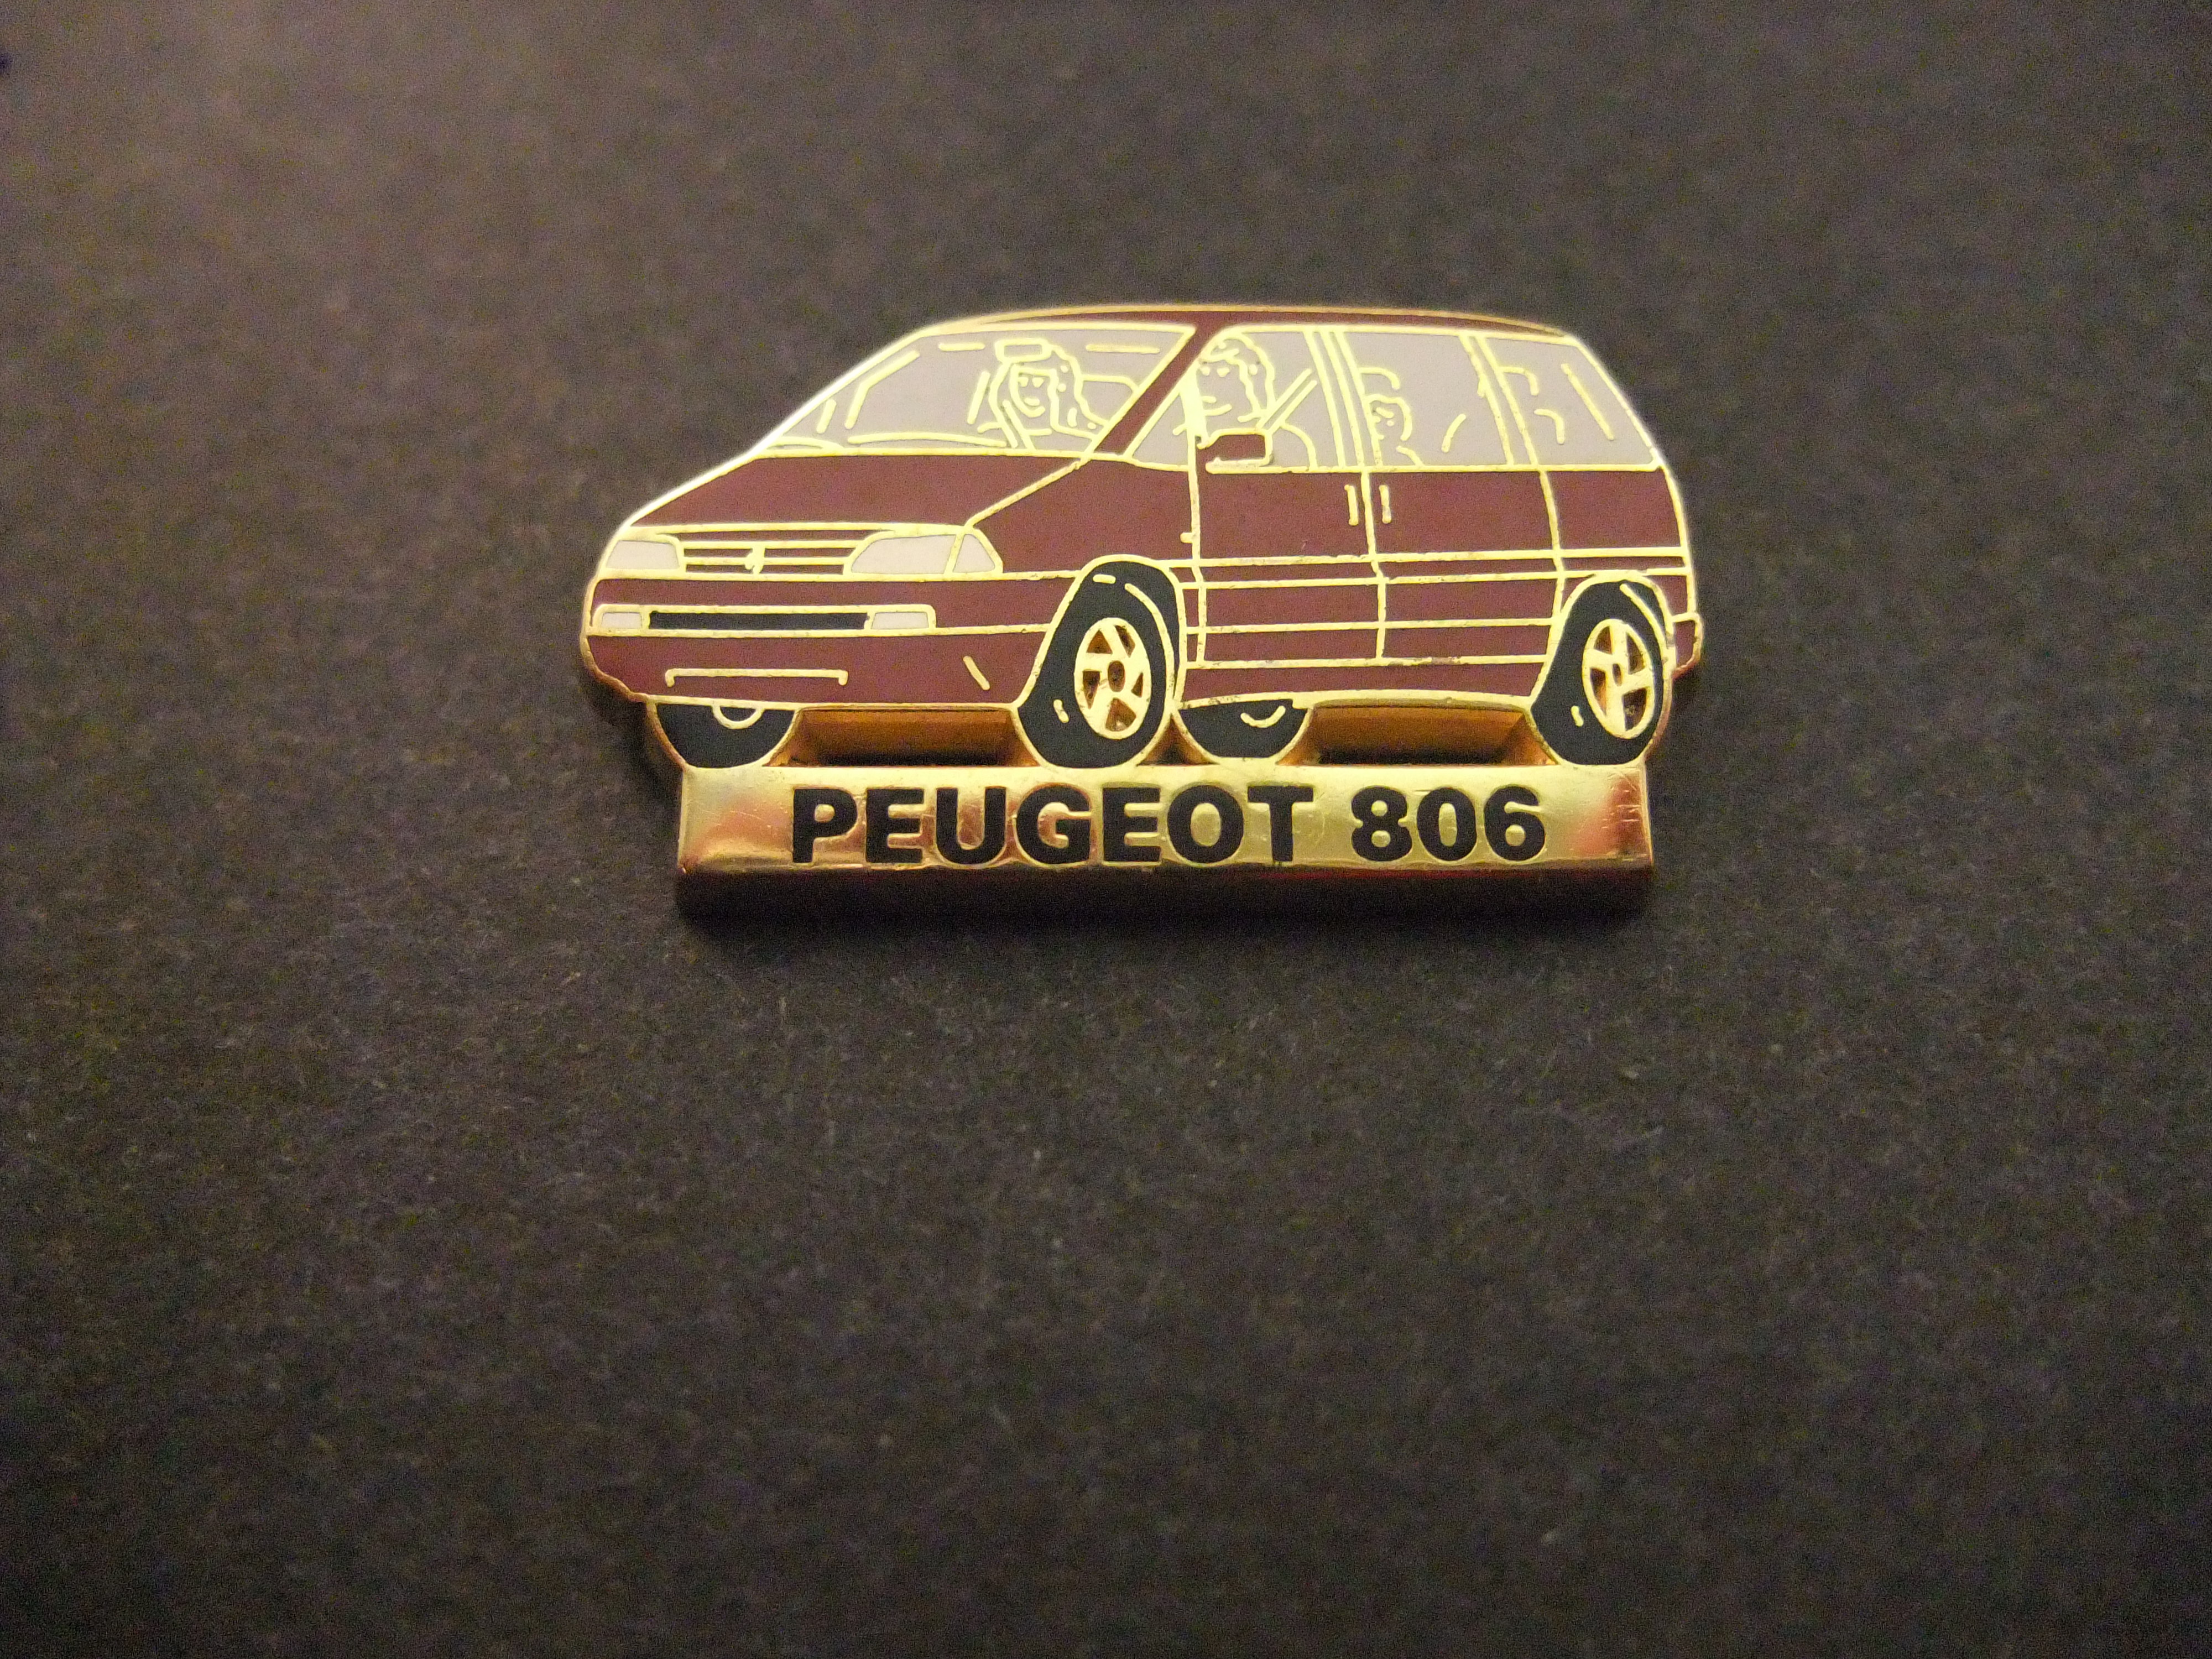 Peugeot 806 MPV bordeaux rood